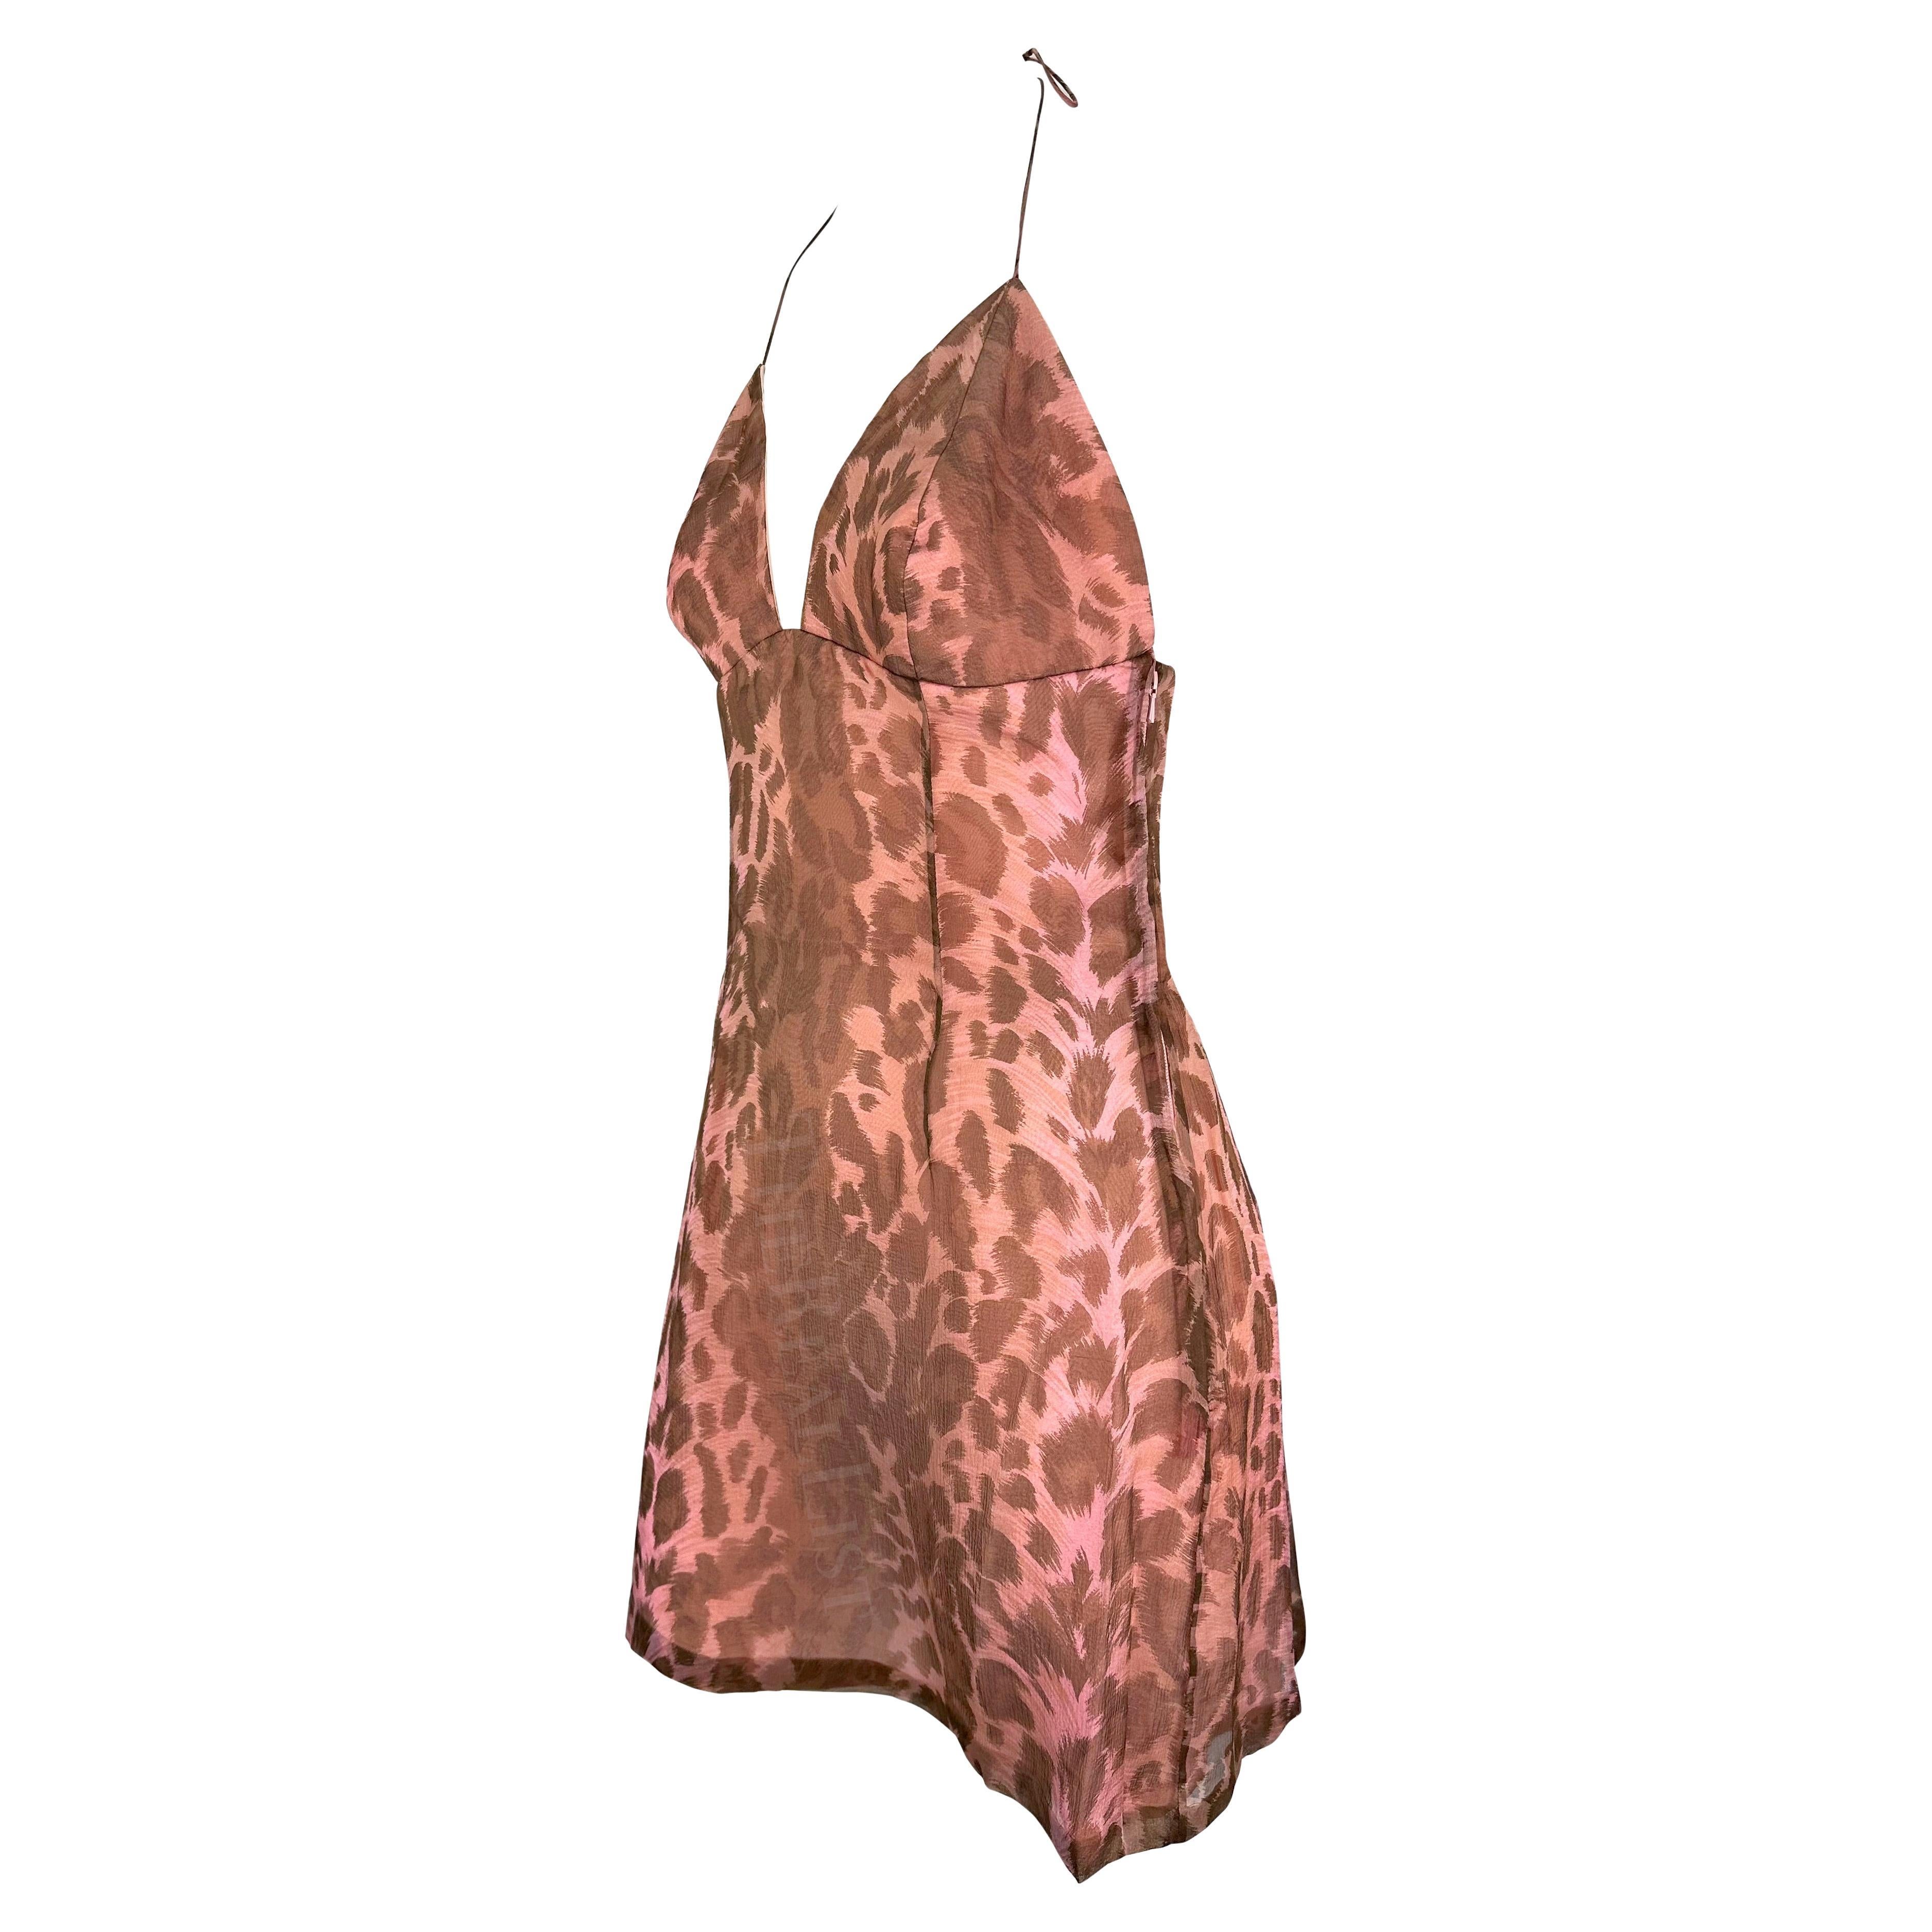 S/S 1997 Jacques Fath Runway Pink Cheetah Print Halter Mini Dress For Sale 3